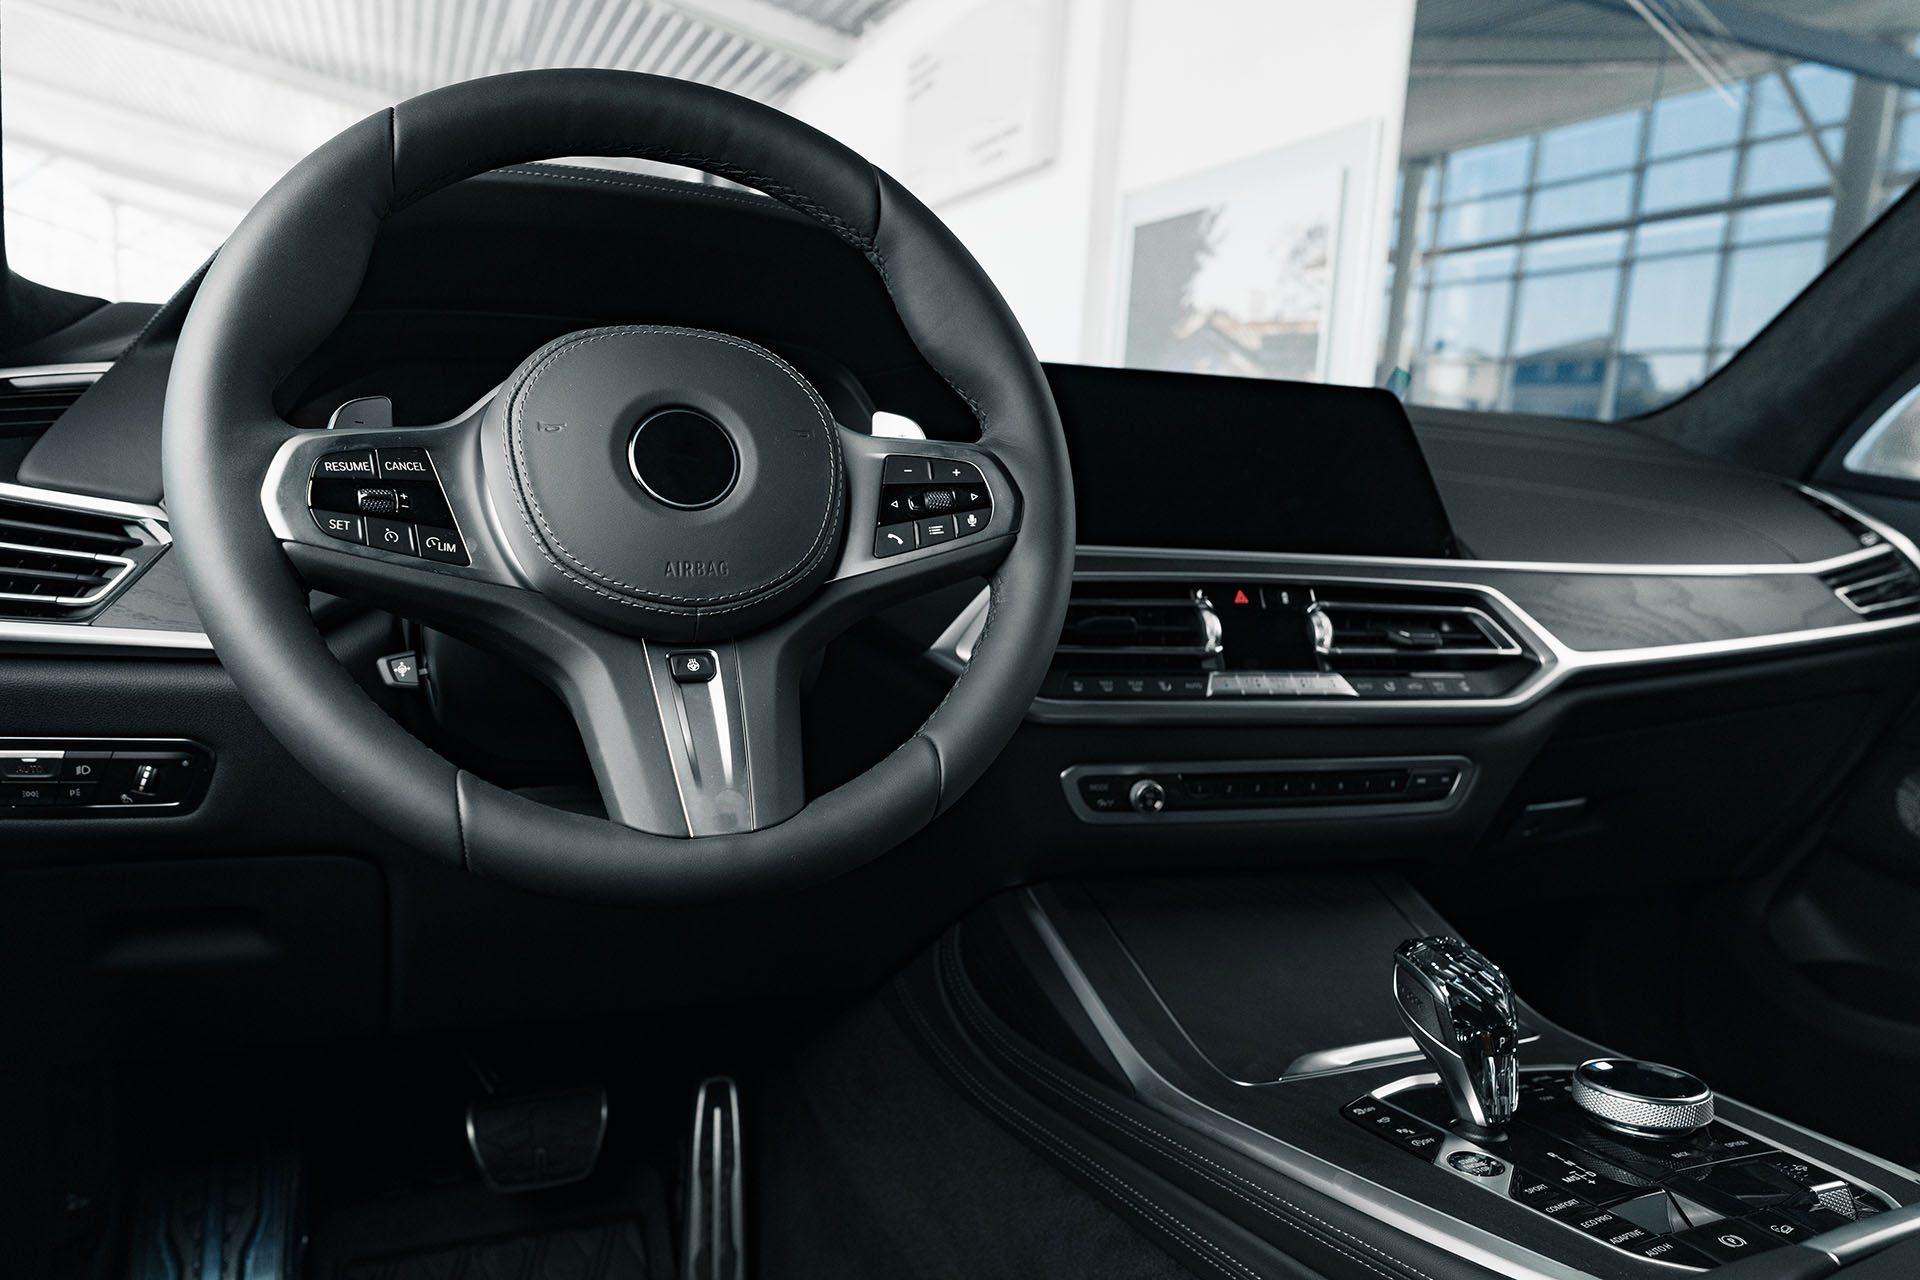 steering-wheel-of-a-new-luxury-car-2021-12-09-11-42-08-utc